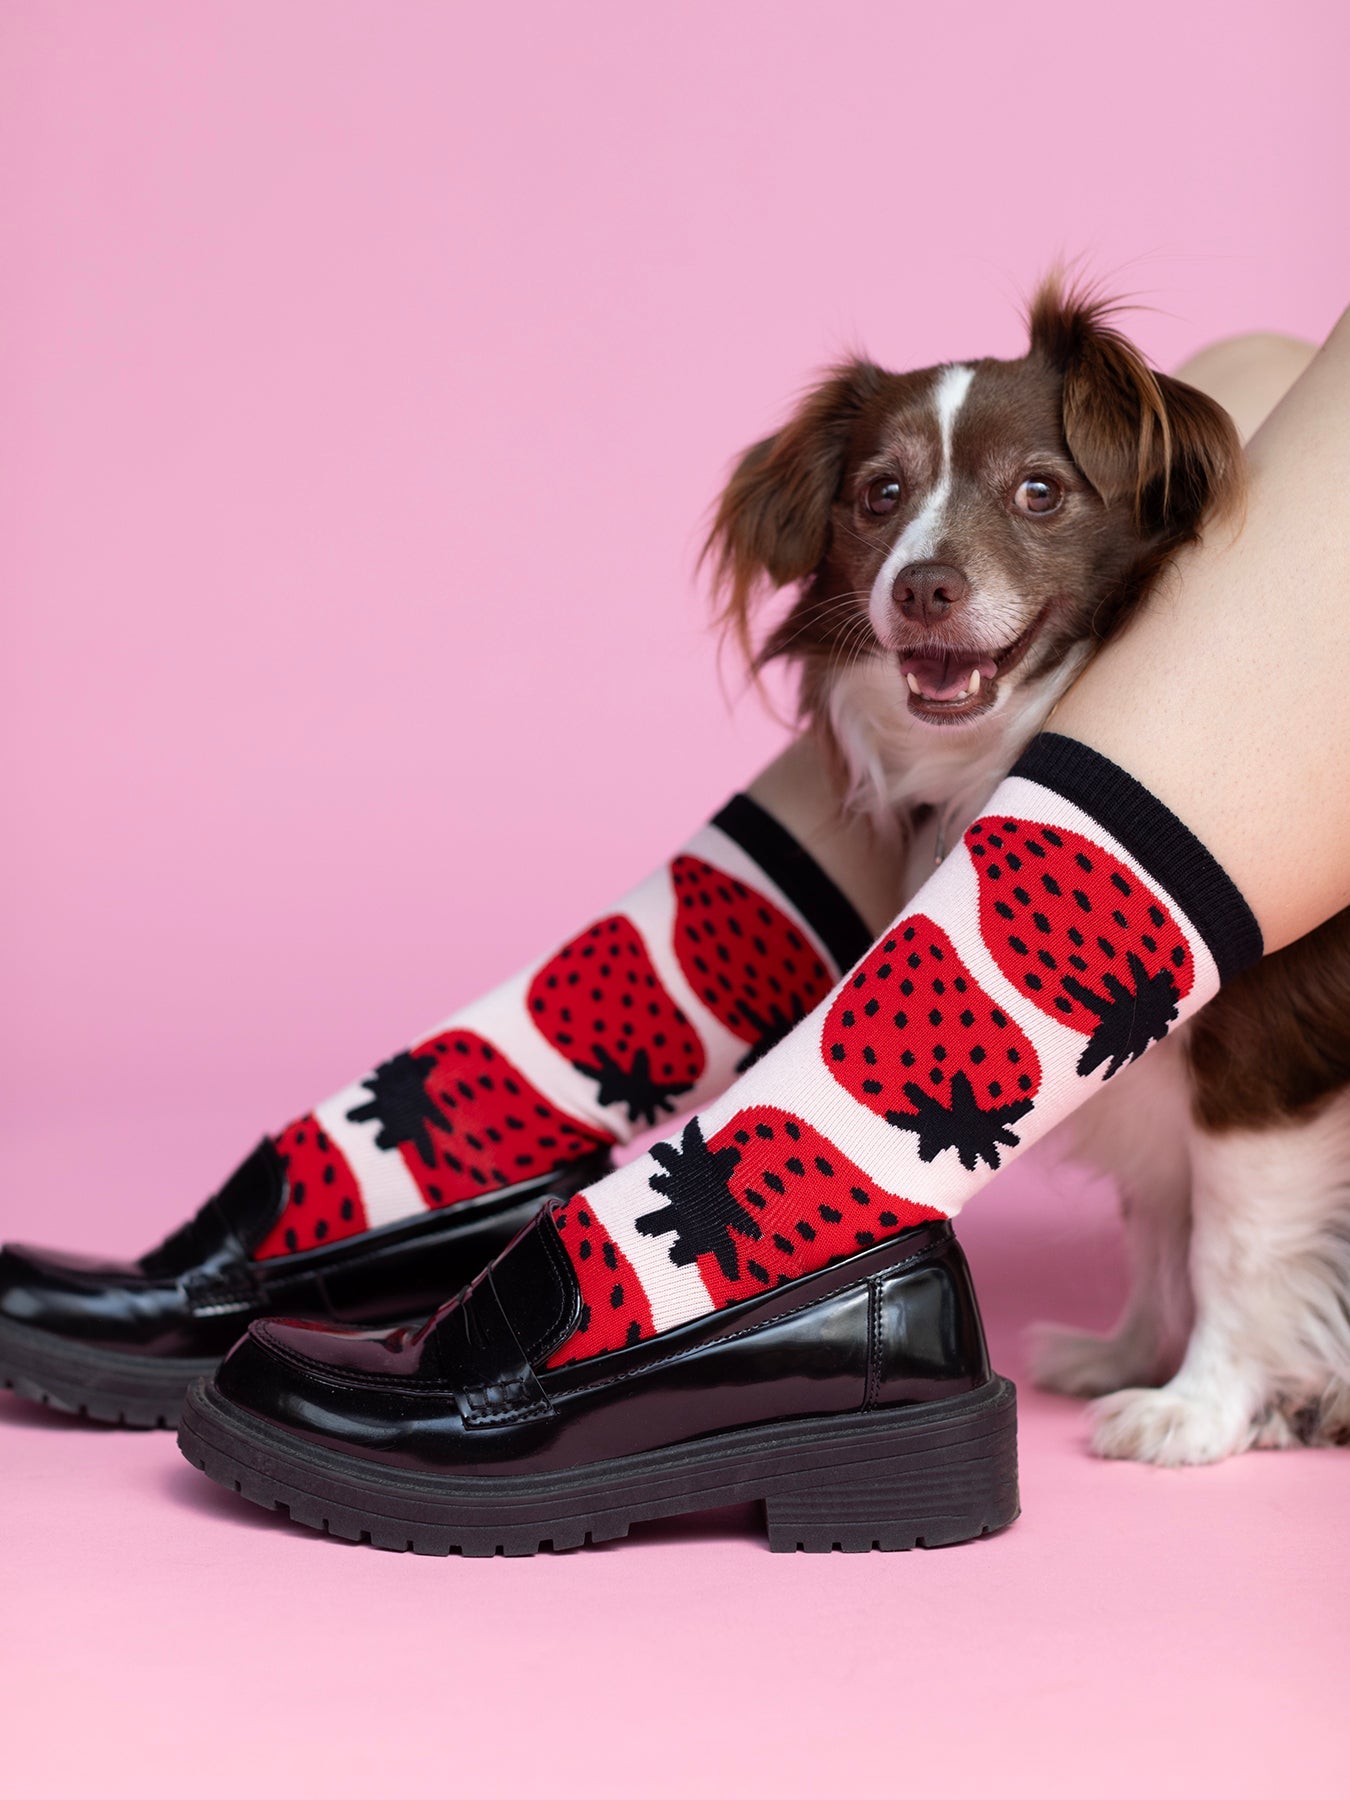 SOCKS Strawberries Black - Lesley Evers-colorful socks-crew socks-fun socks